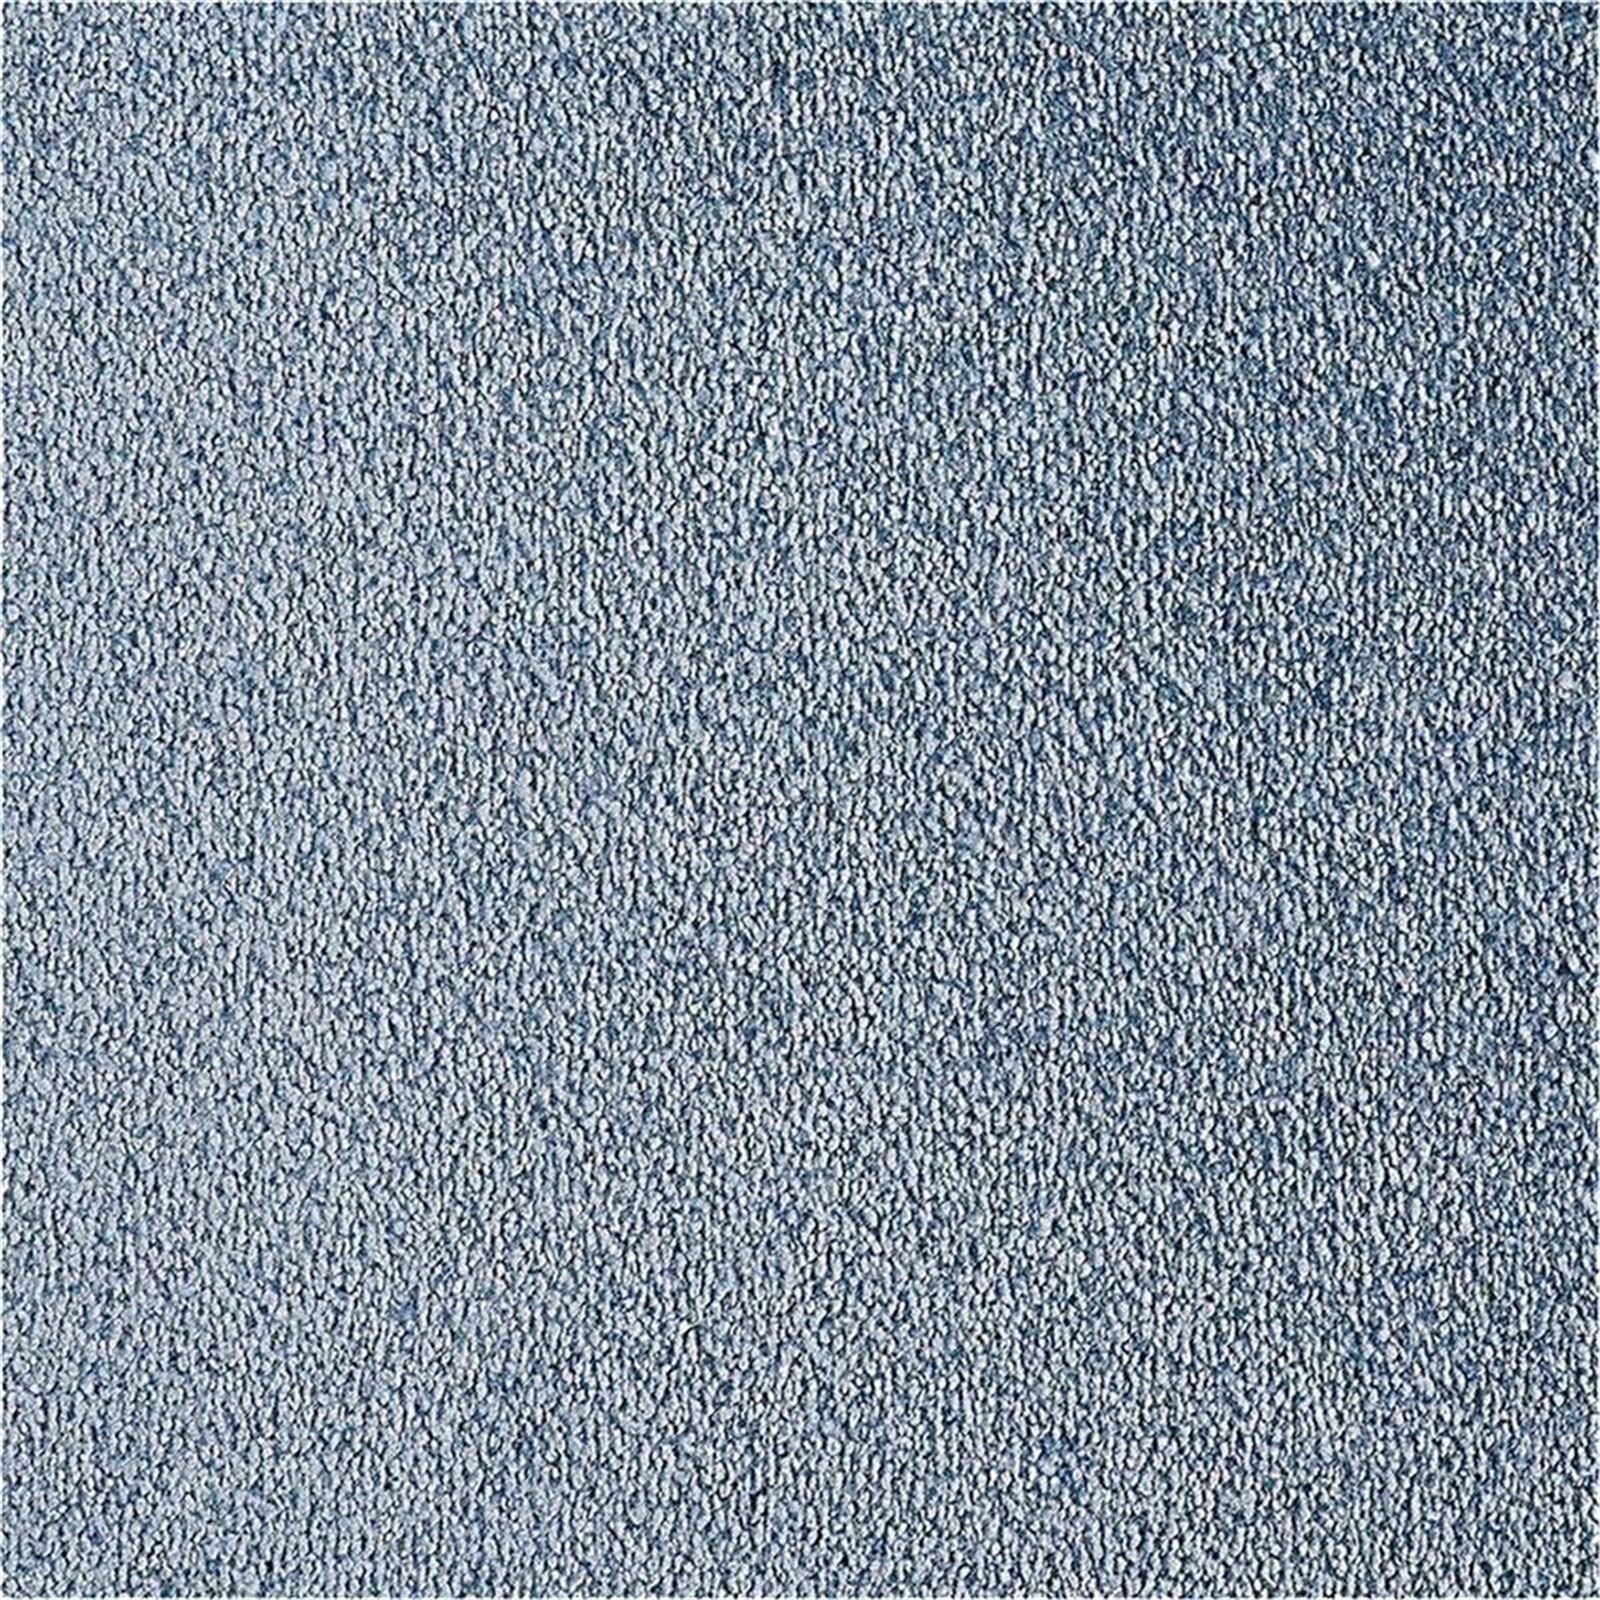 Teppichboden Infloor-Girloon Cosy Velours Blau 321 uni - Rollenbreite 400 cm